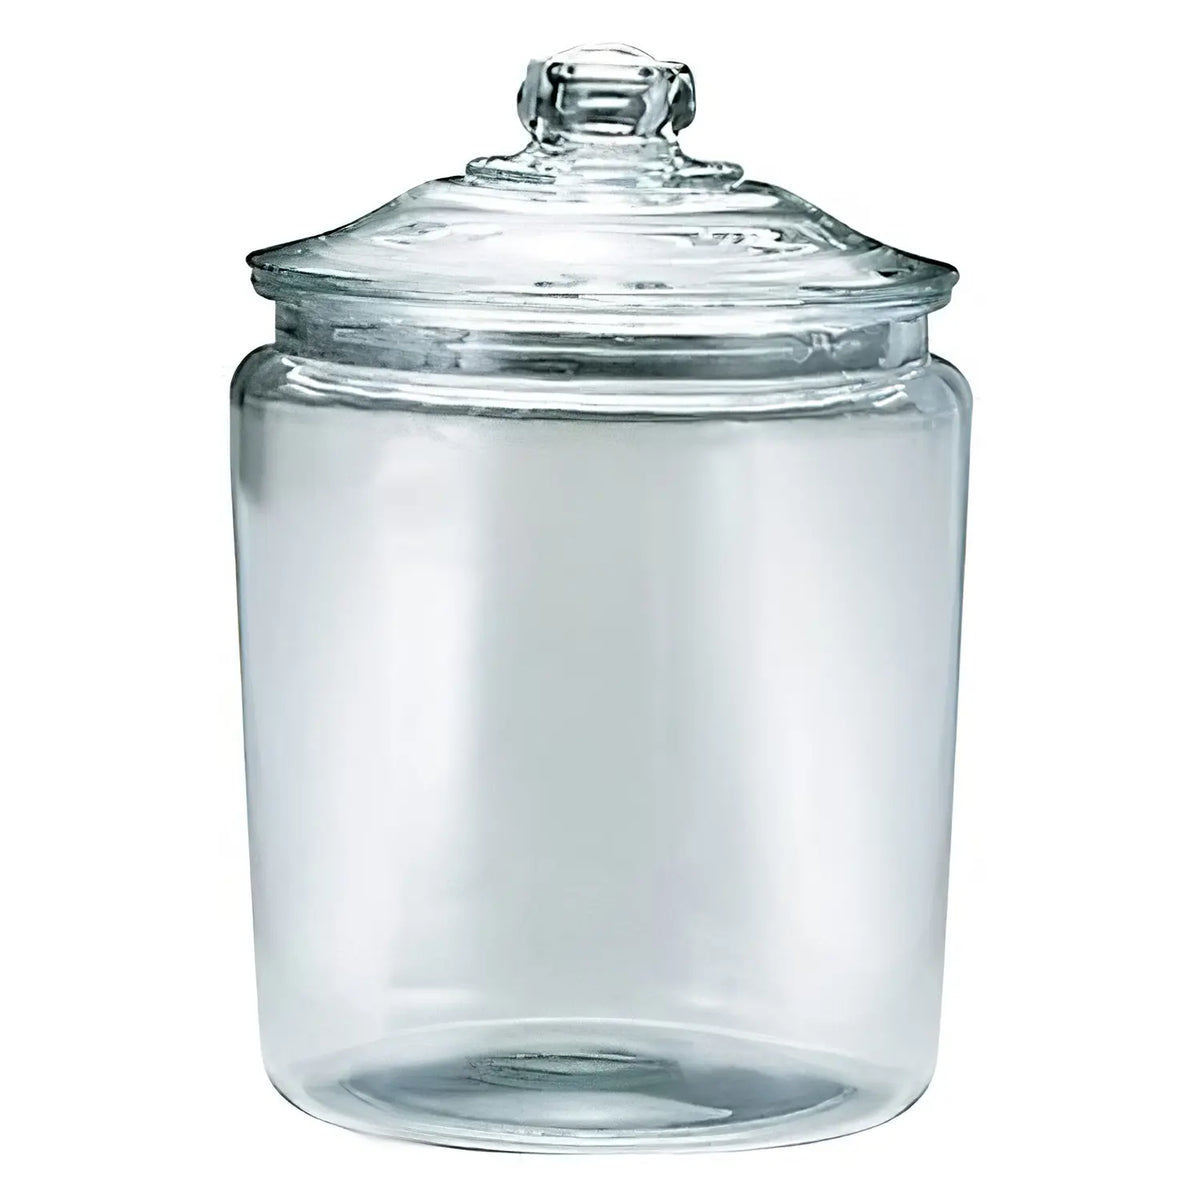 Ninomiya Crystal Glass Storage Jar